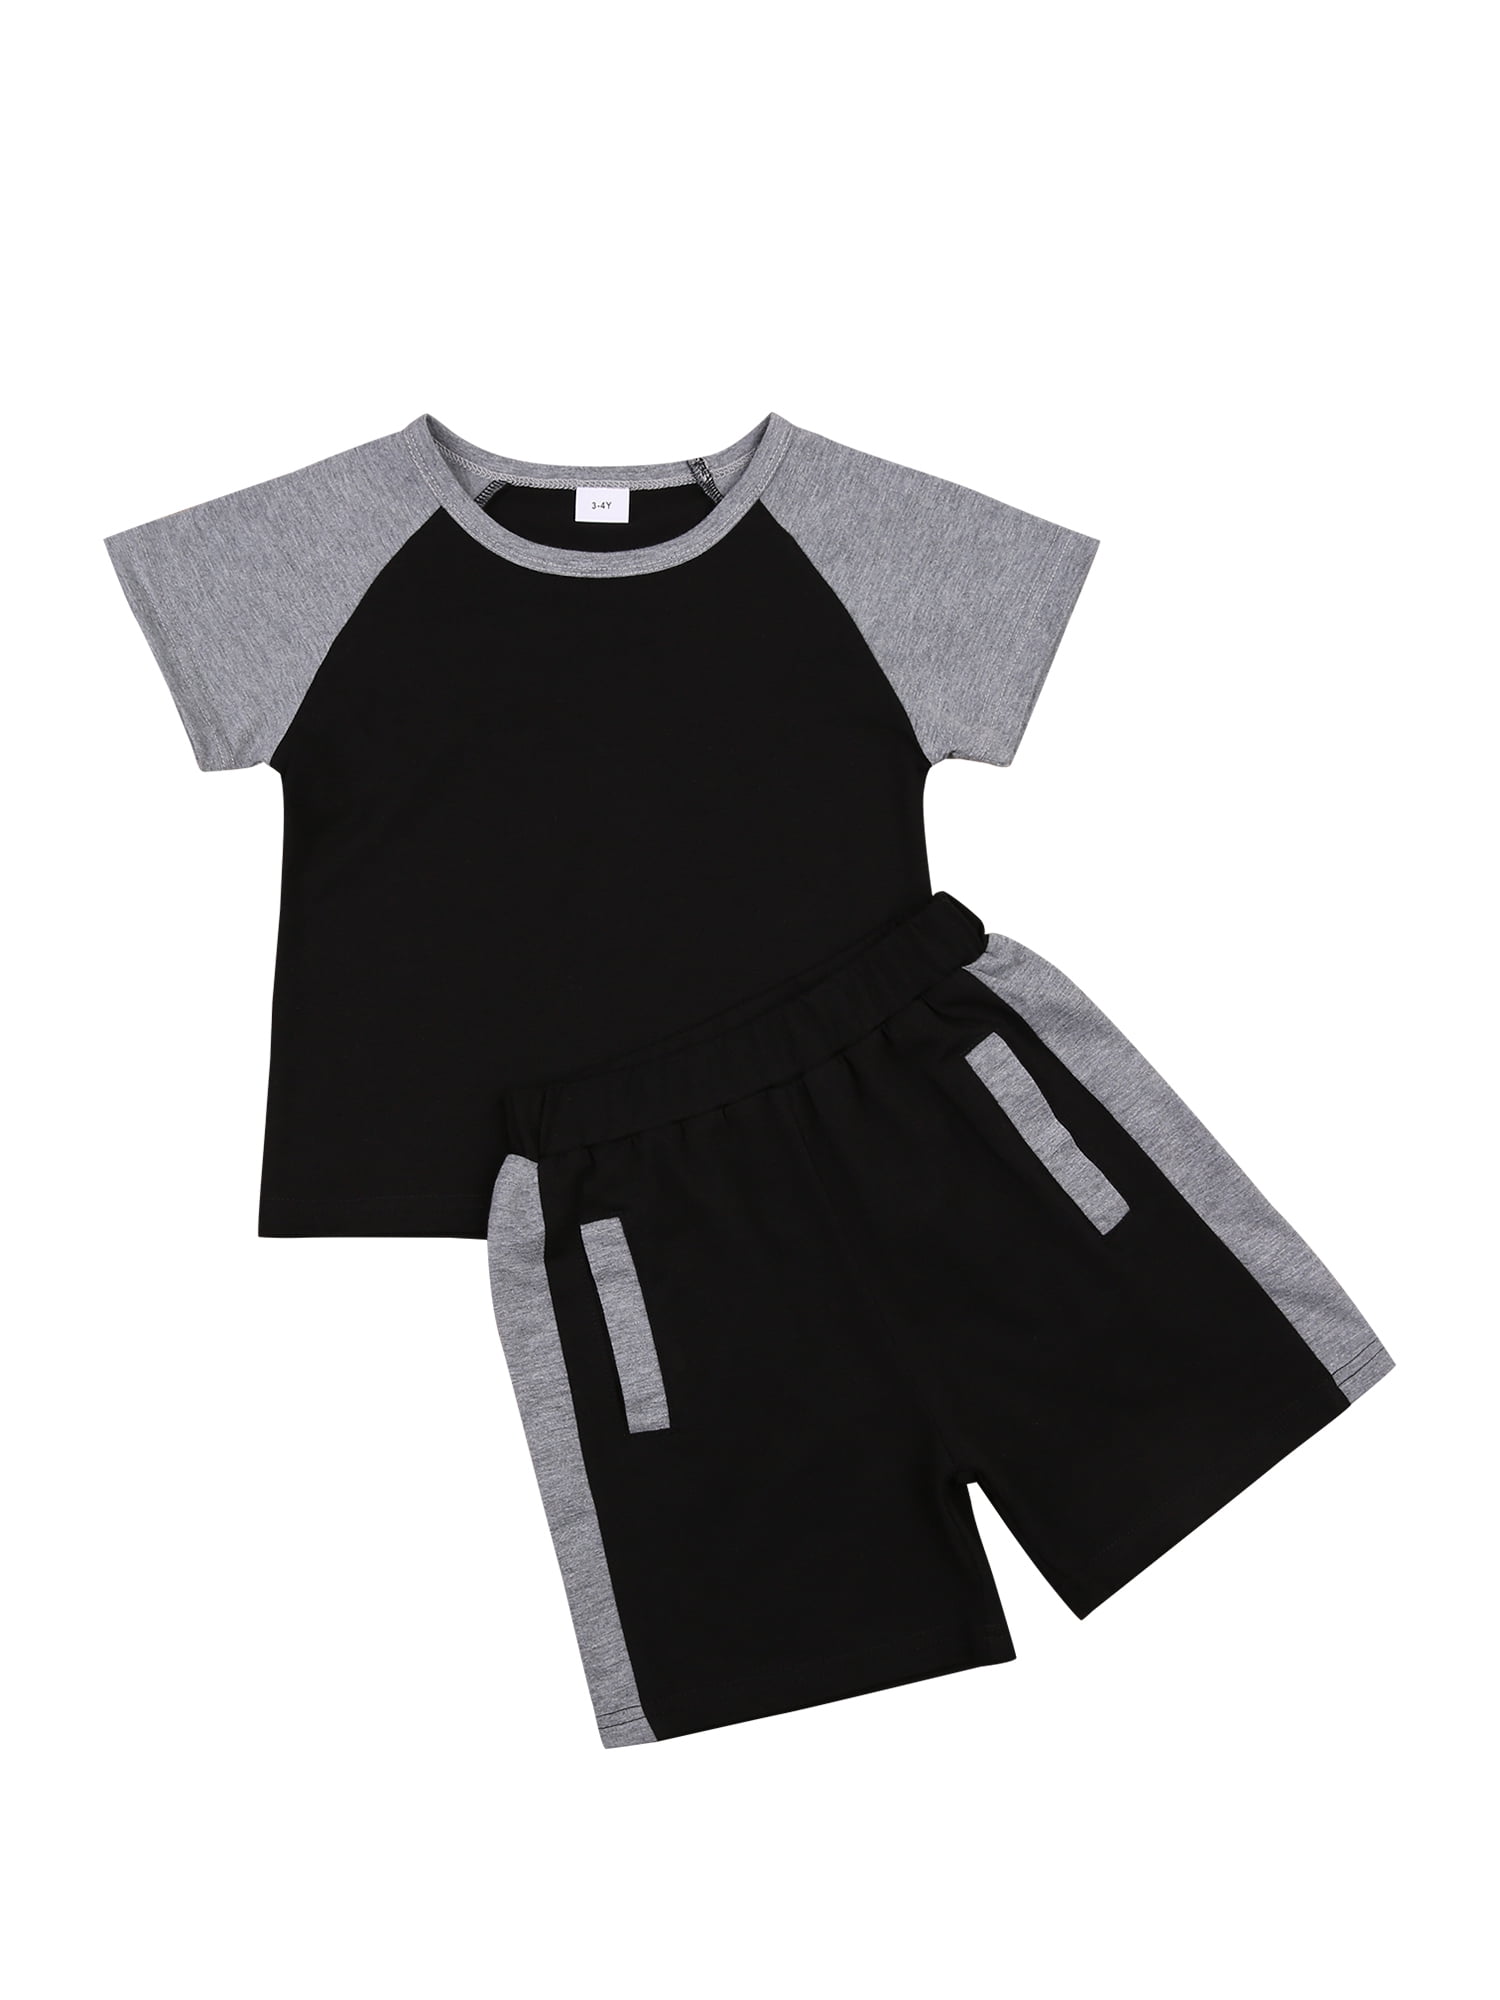 Details about   2PCS/Set Toddler Kids Baby Boys T-shirt Tops+Long Pants Tracksuit Clothes Casual 